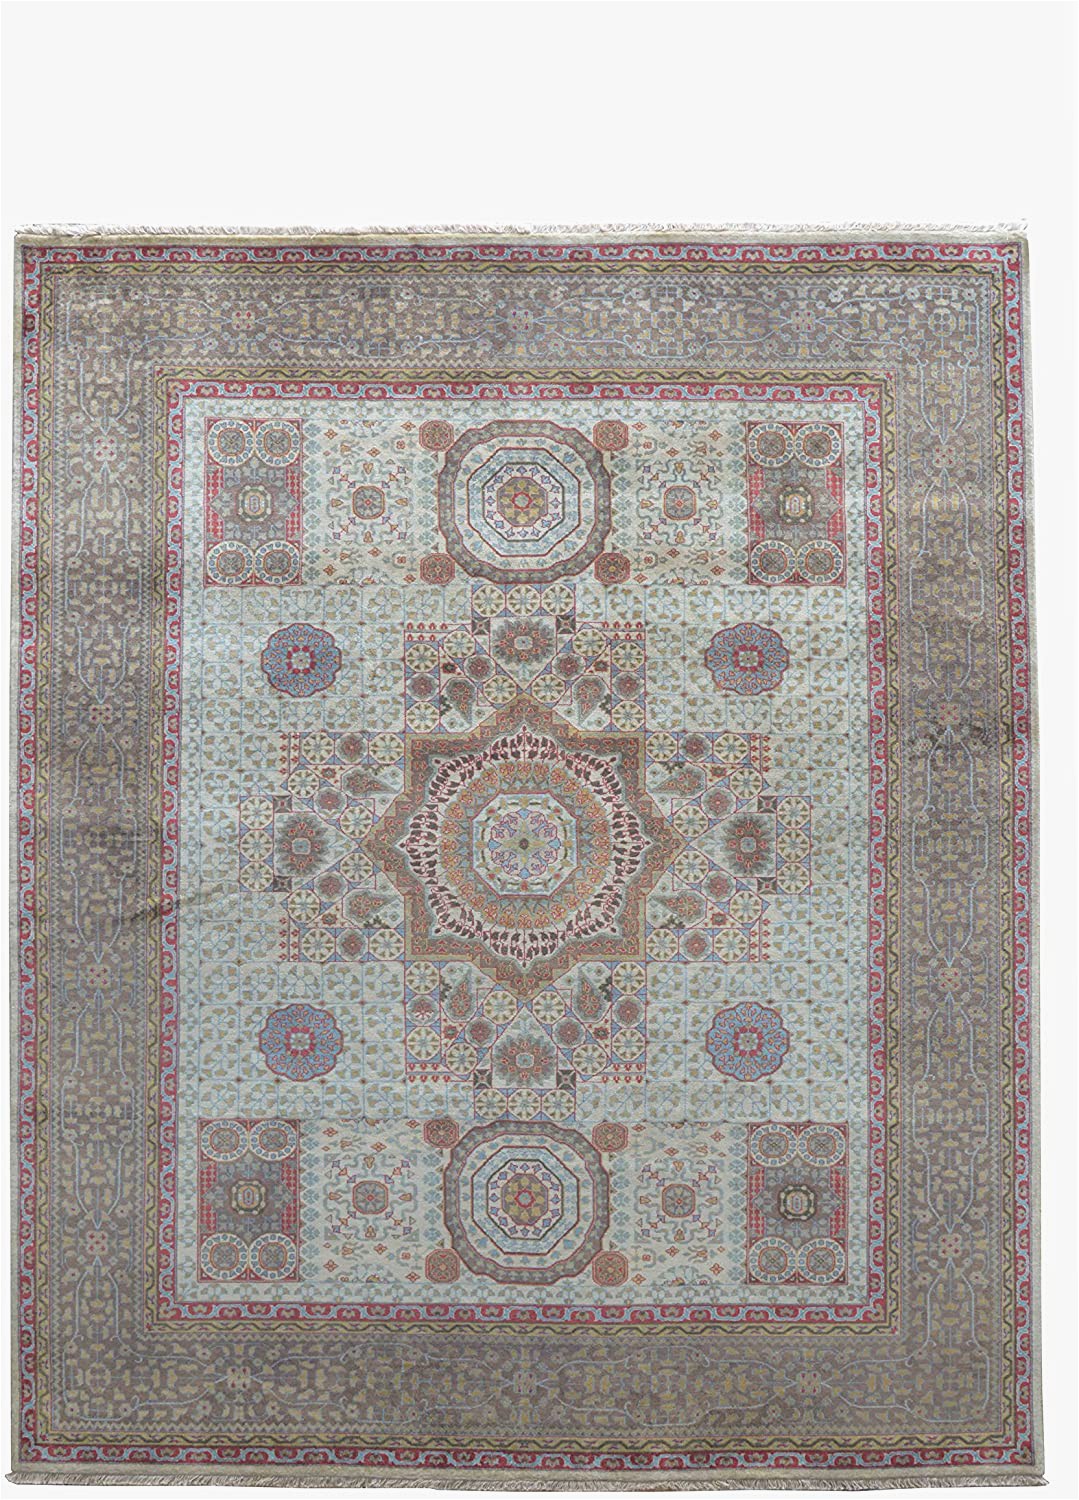 8 X 14 area Rug Amazon Merorug Multi Color Hand Knotted Nepali Carpet 8